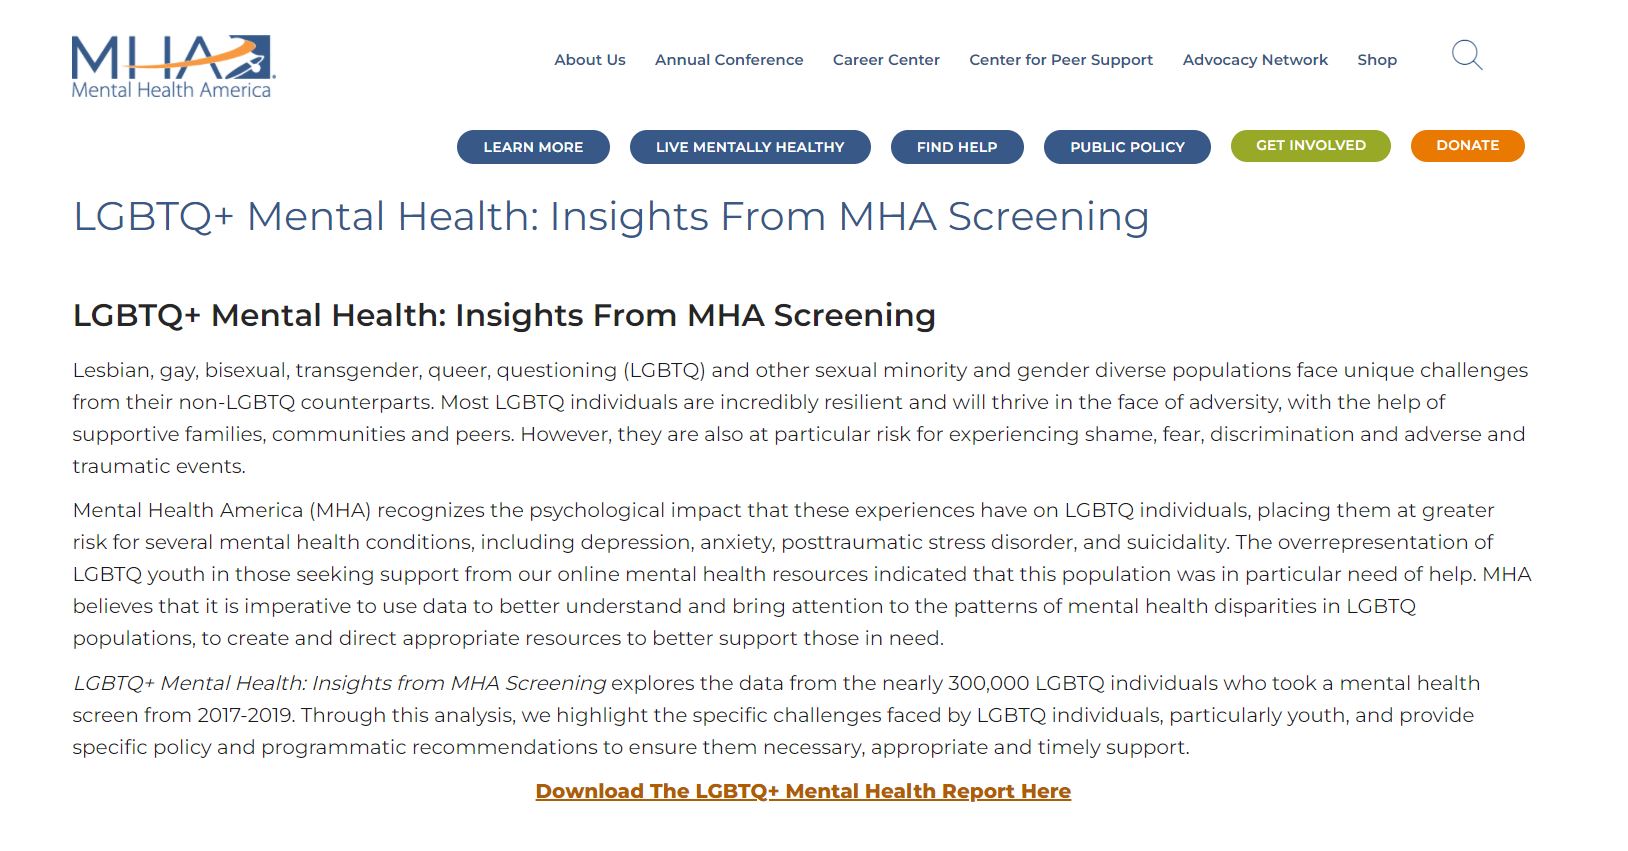 Mental Health America: LGBTQ+ Mental Health: Insights from MHA Screening